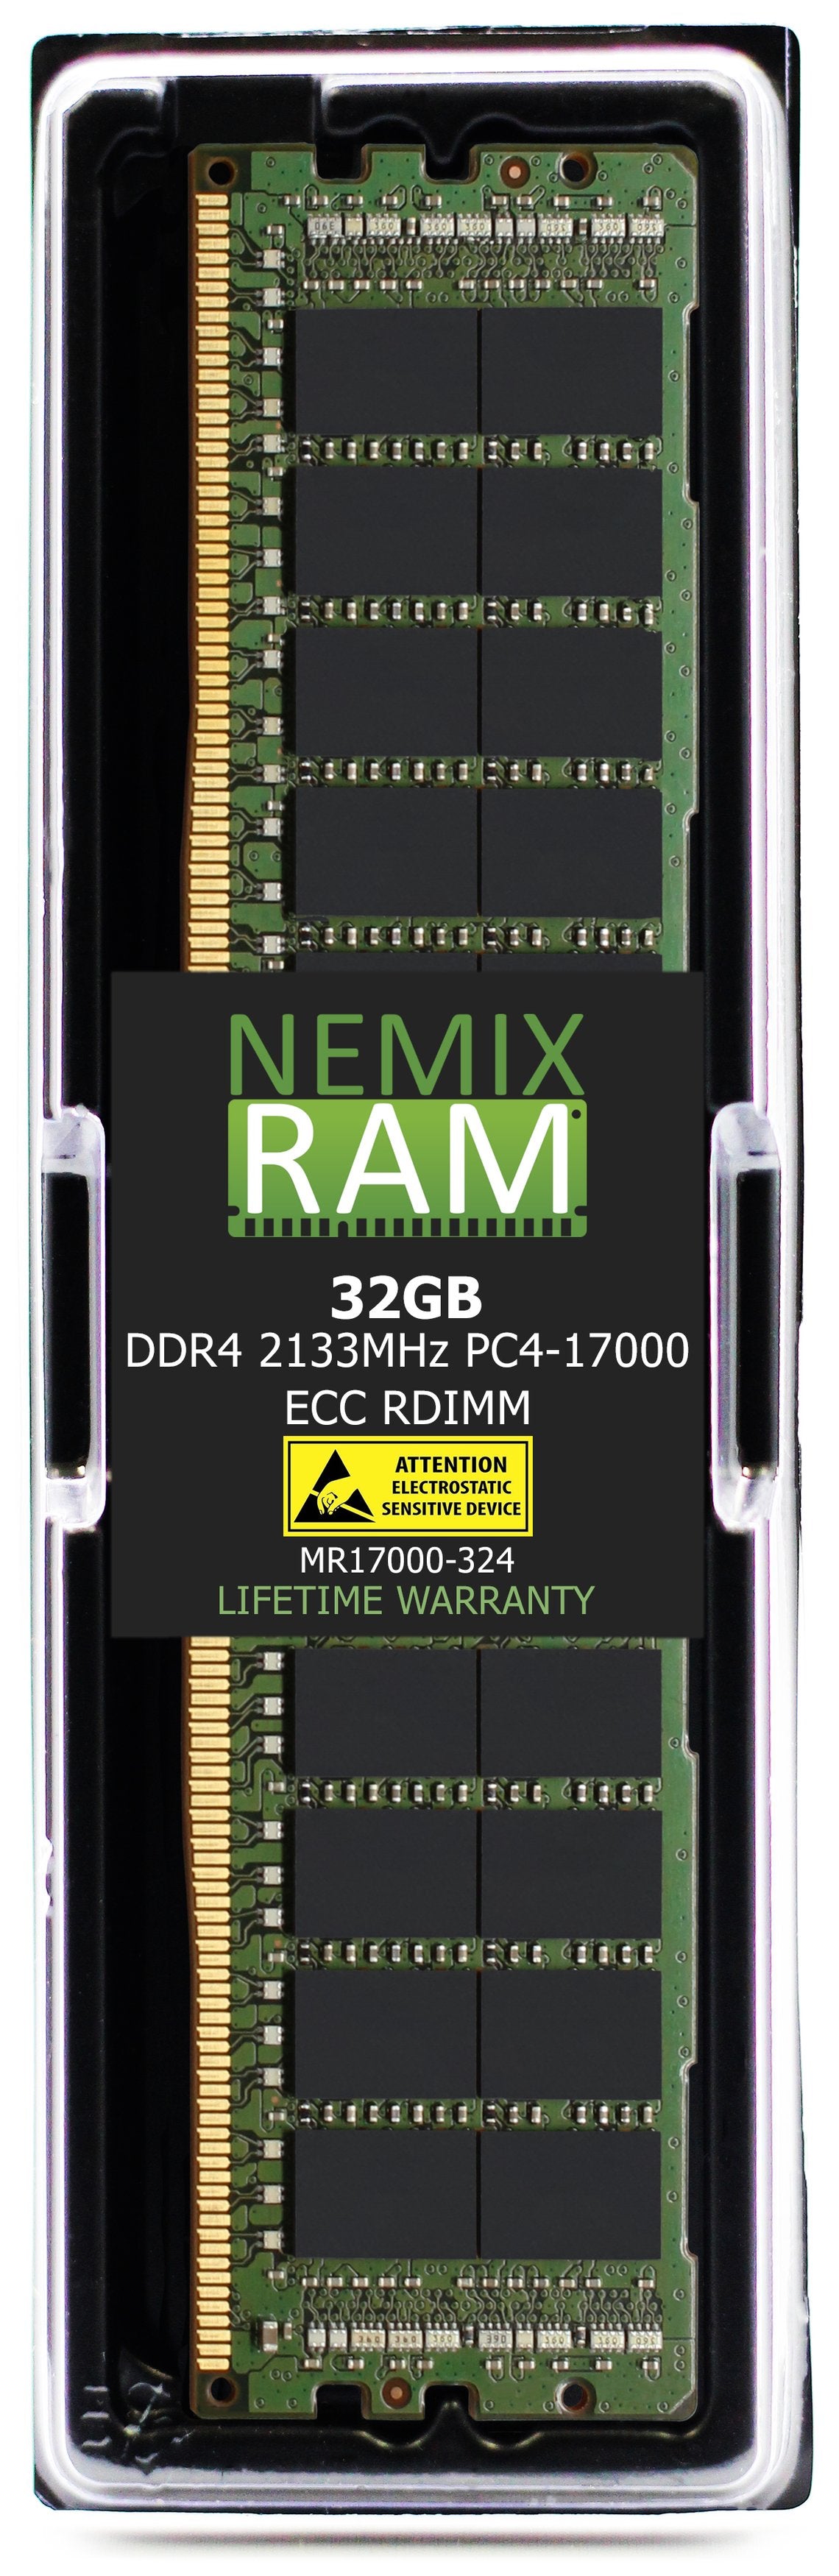 Hynix HMAA4GR8MMR4N-TF 32GB DDR4 2133MHZ PC4-17000 RDIMM Compatible Memory Module